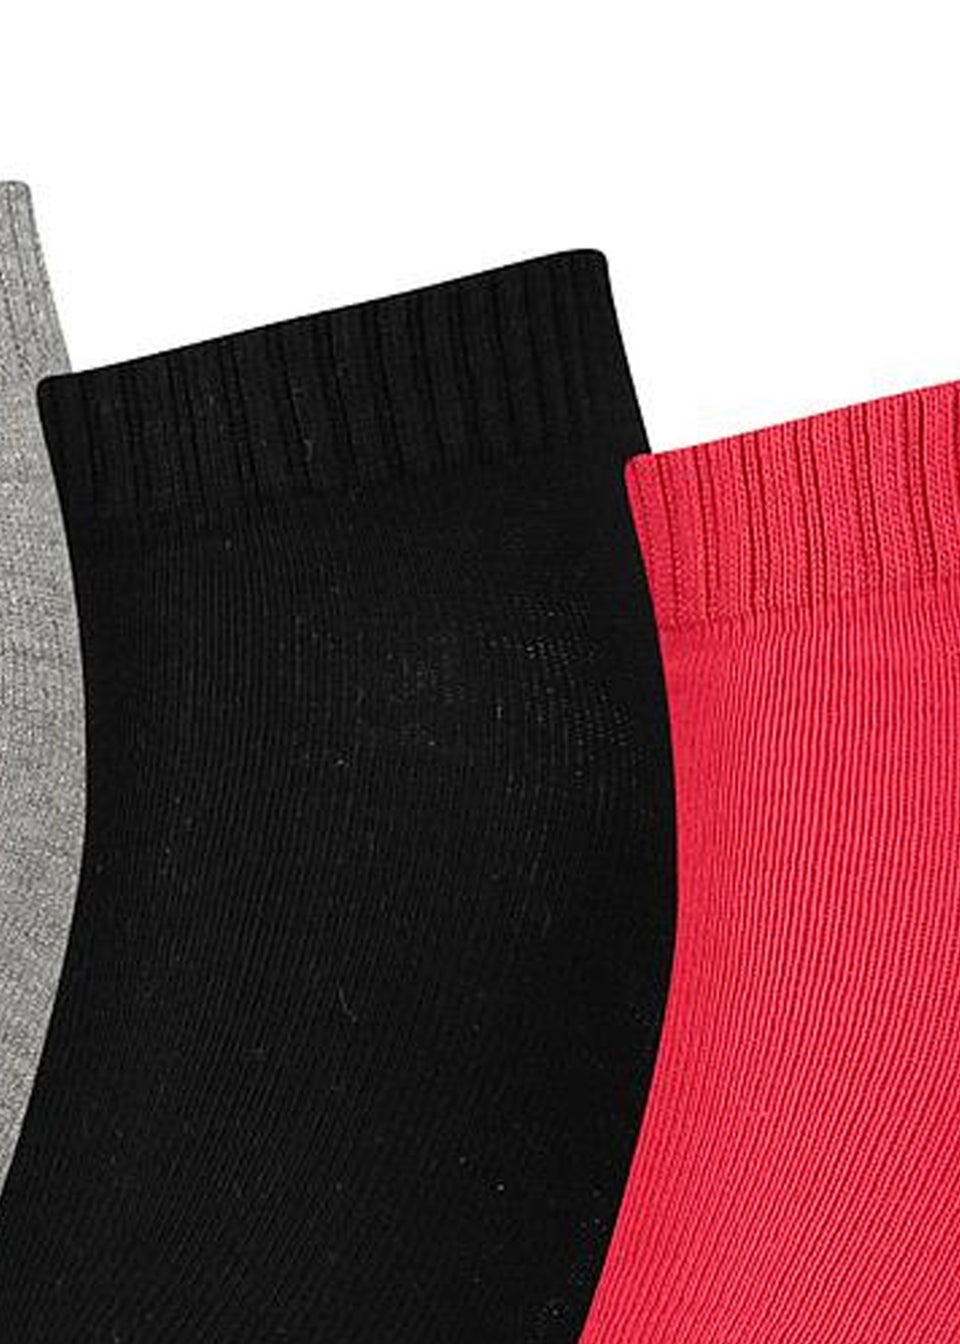 Puma Black/Red Quarter Training Ankle Socks (Pack of 3)